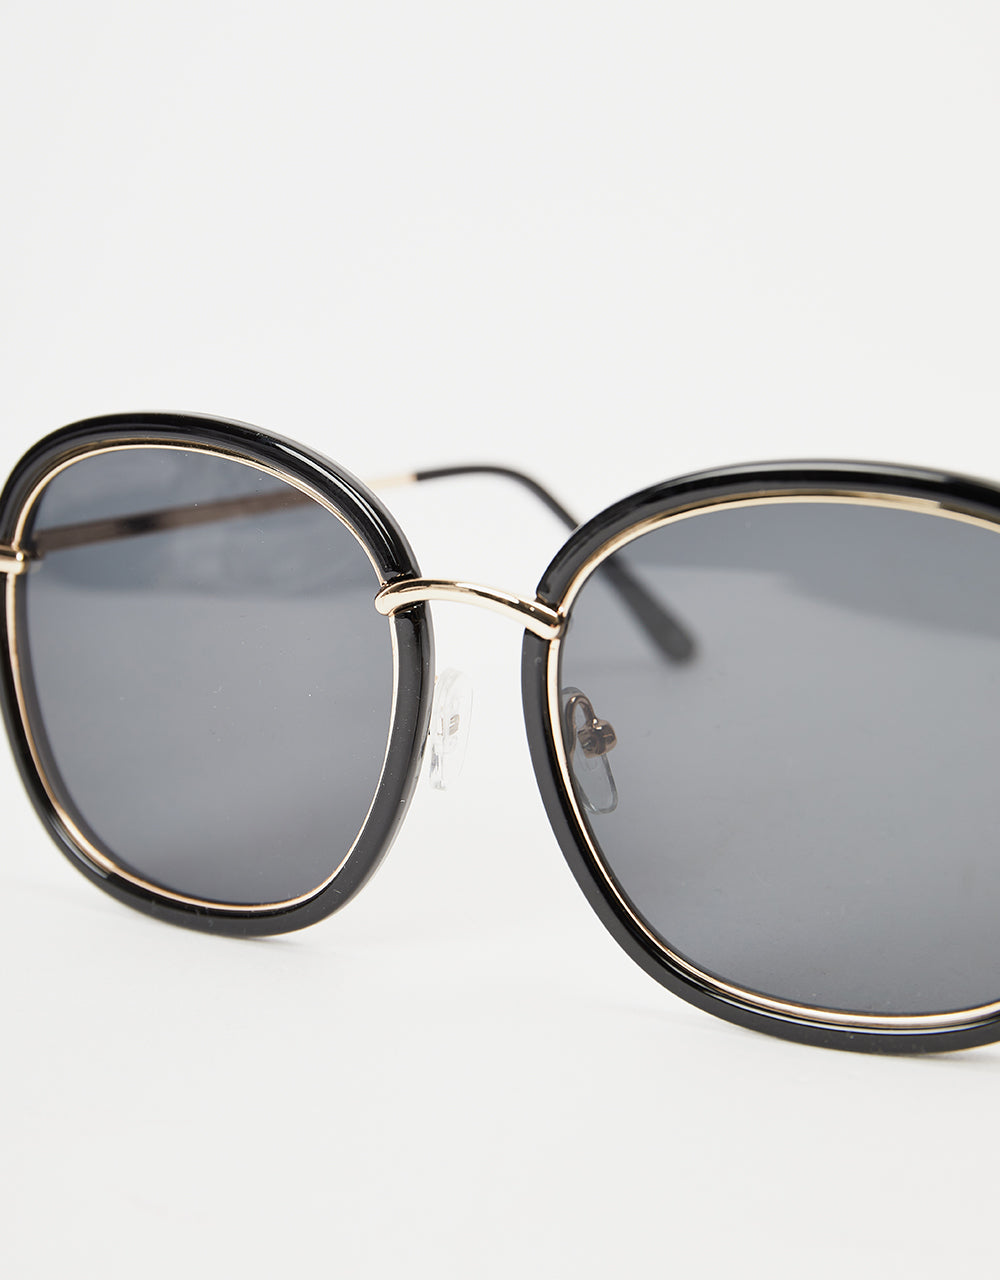 Route One Rimmed Sunglasses - Black/Gold (Black Lens)